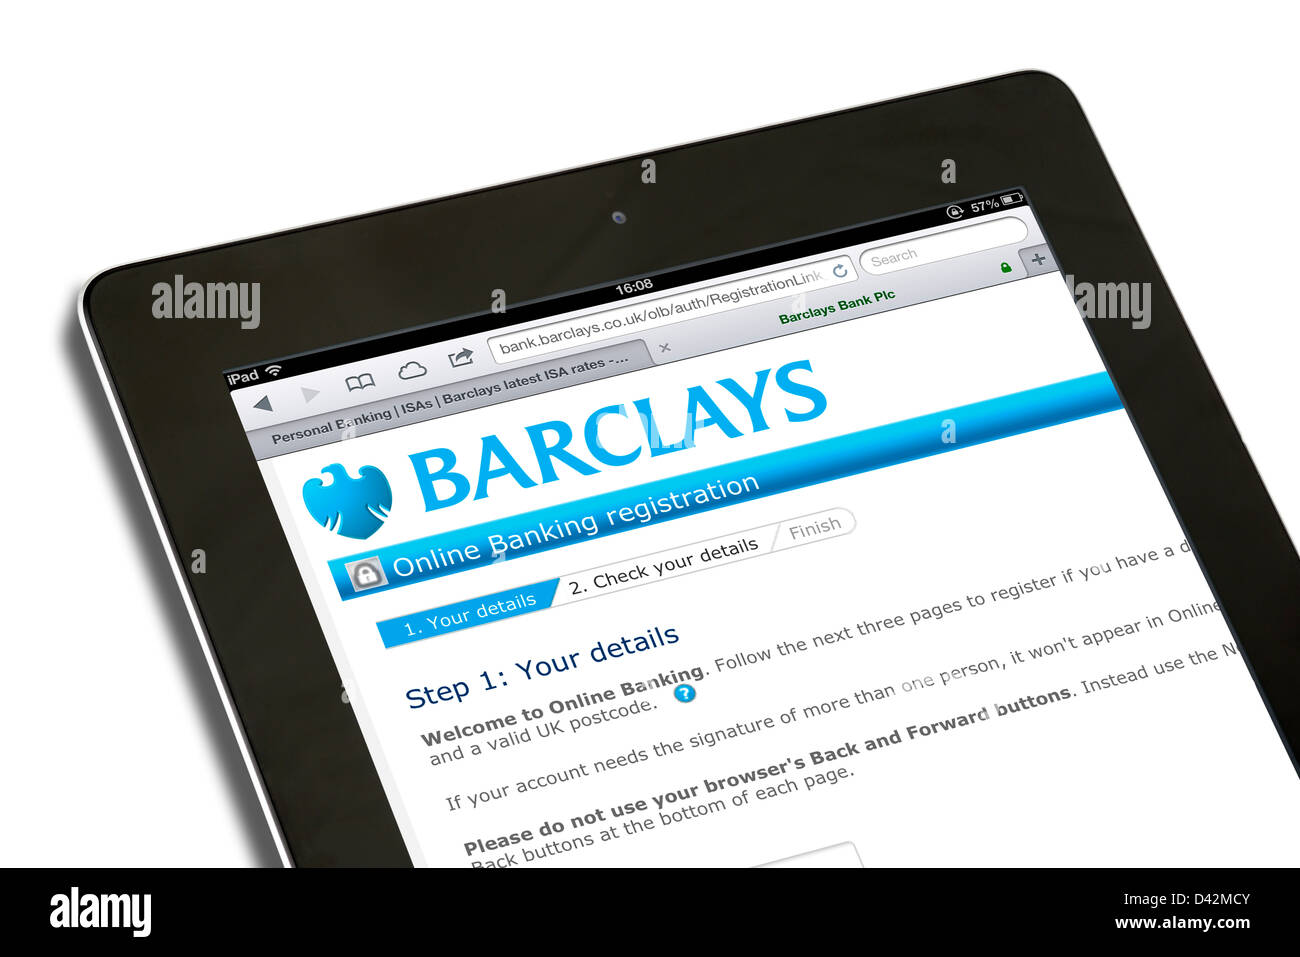 Logging onto a Barclays Bank account on an iPad 4, UK Stock Photo